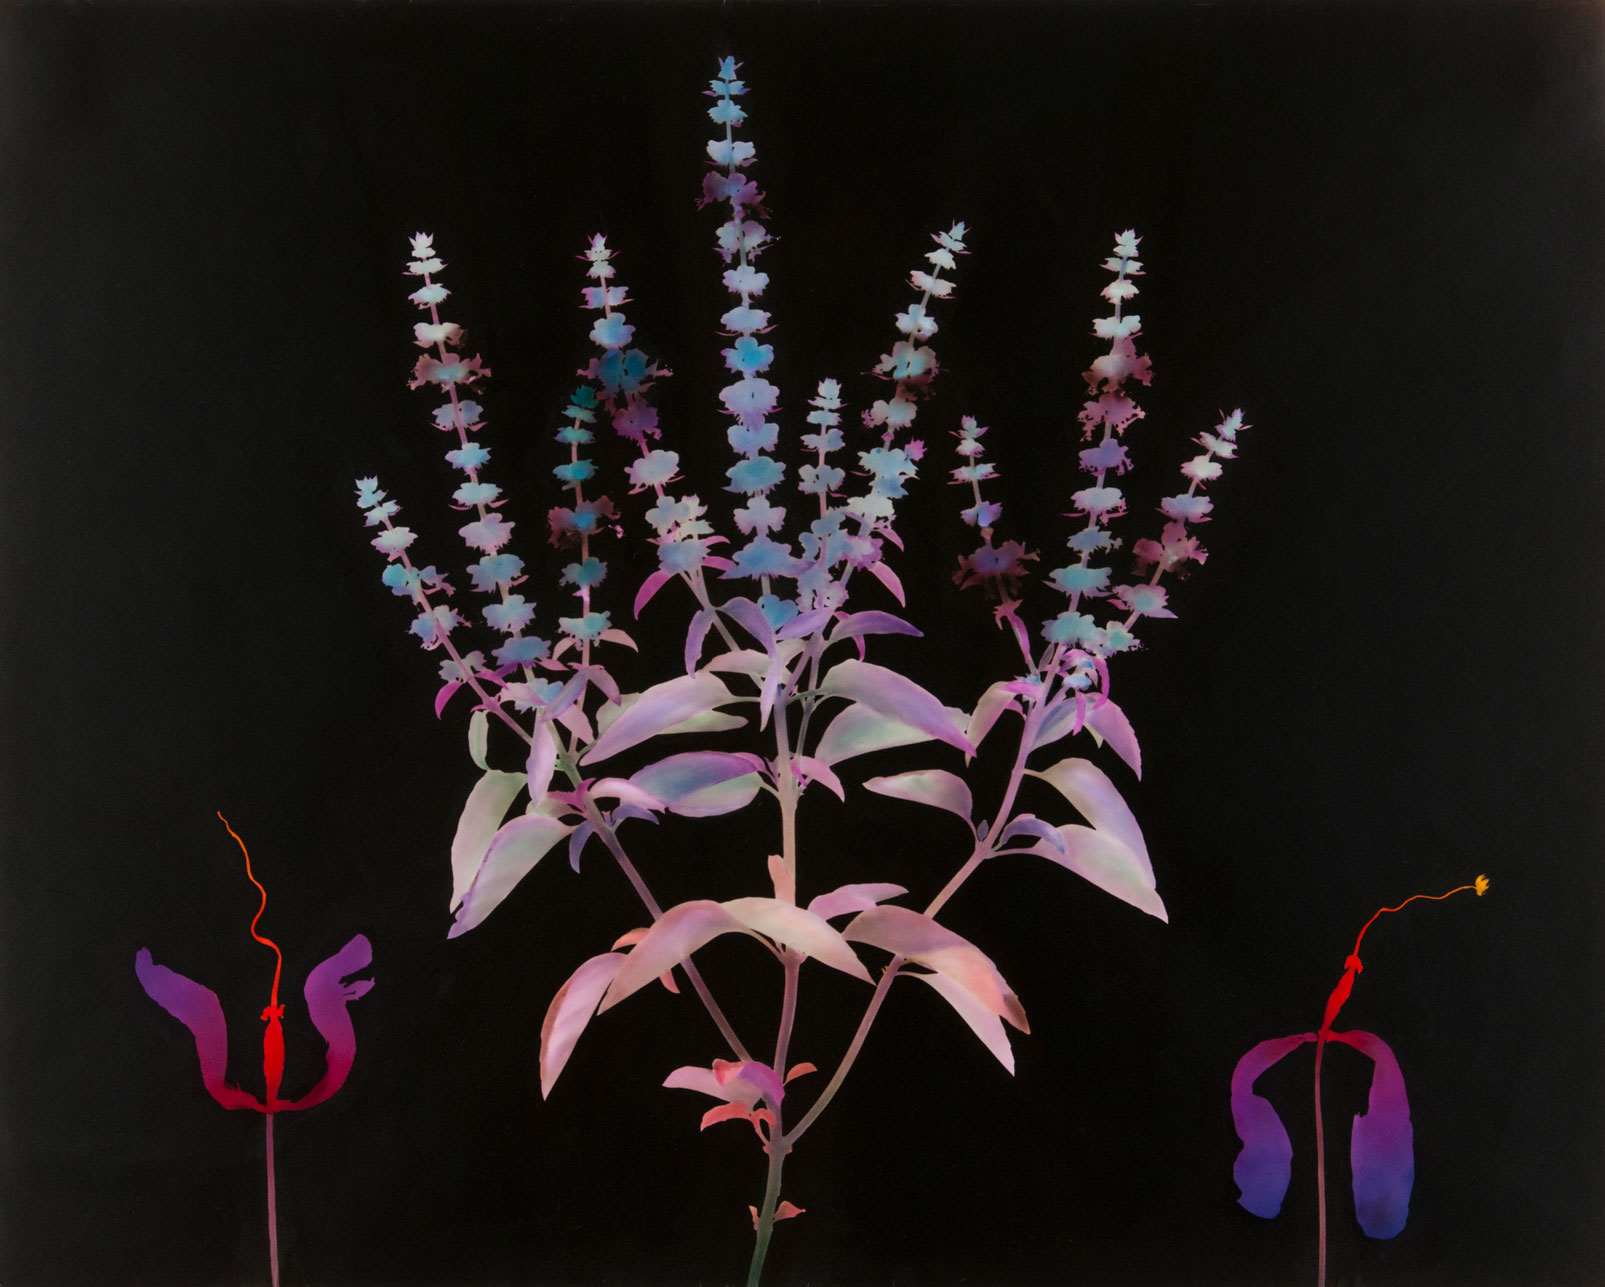 “Garden Series #1 From the Garden Series” by David Lebe, 1979. Gelatin silver print, hand-colored photogram © David Lebe. Image courtesy of Philadelphia Museum of Art, 2018.